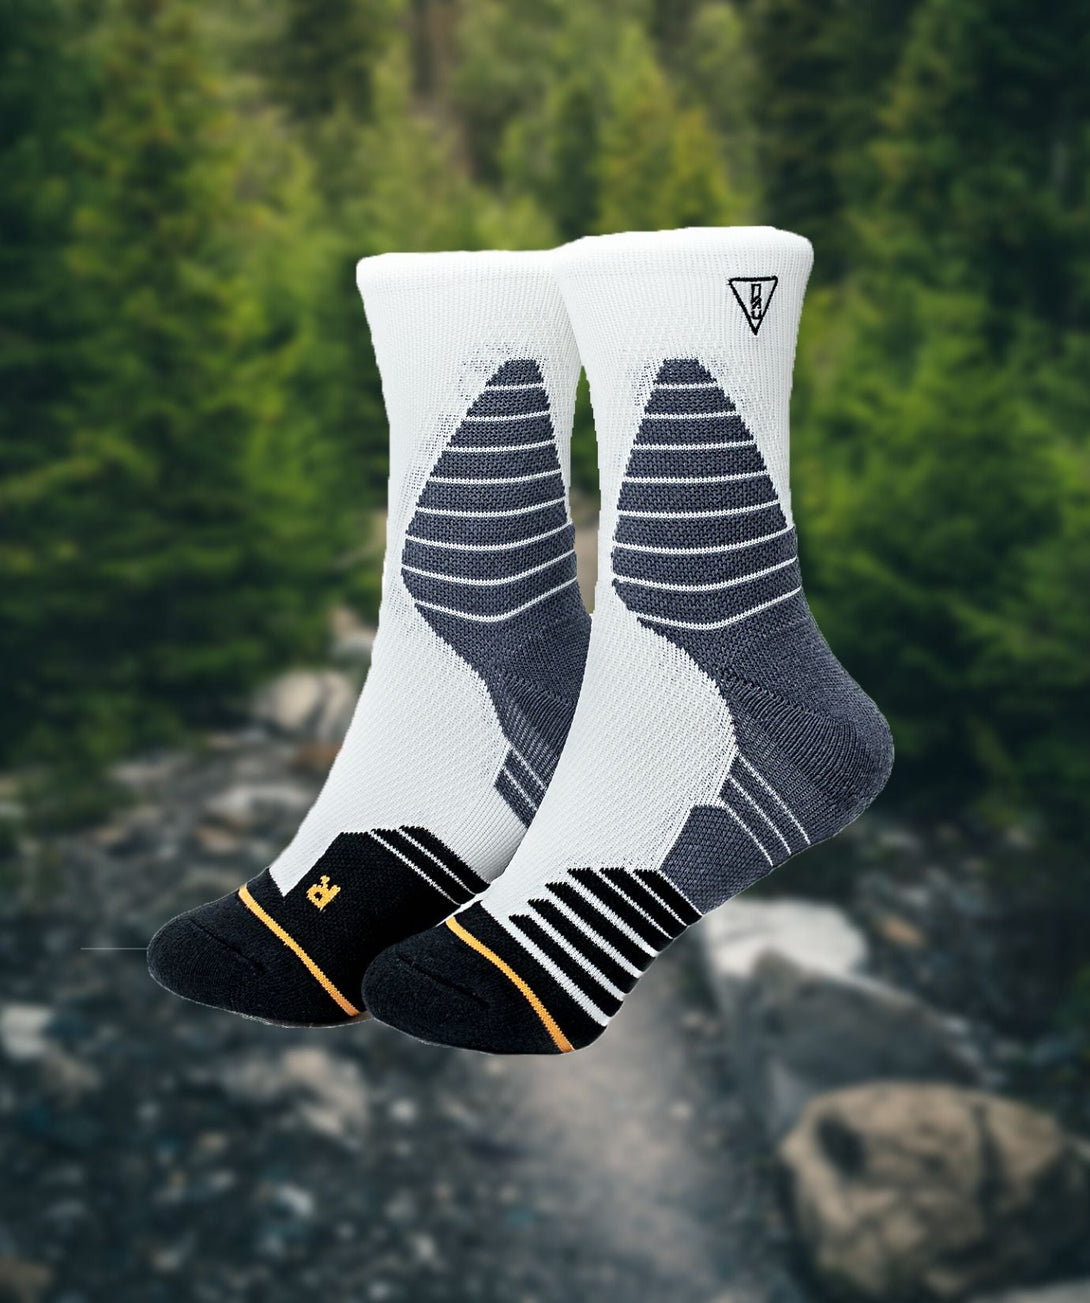 OVER X Performance socks